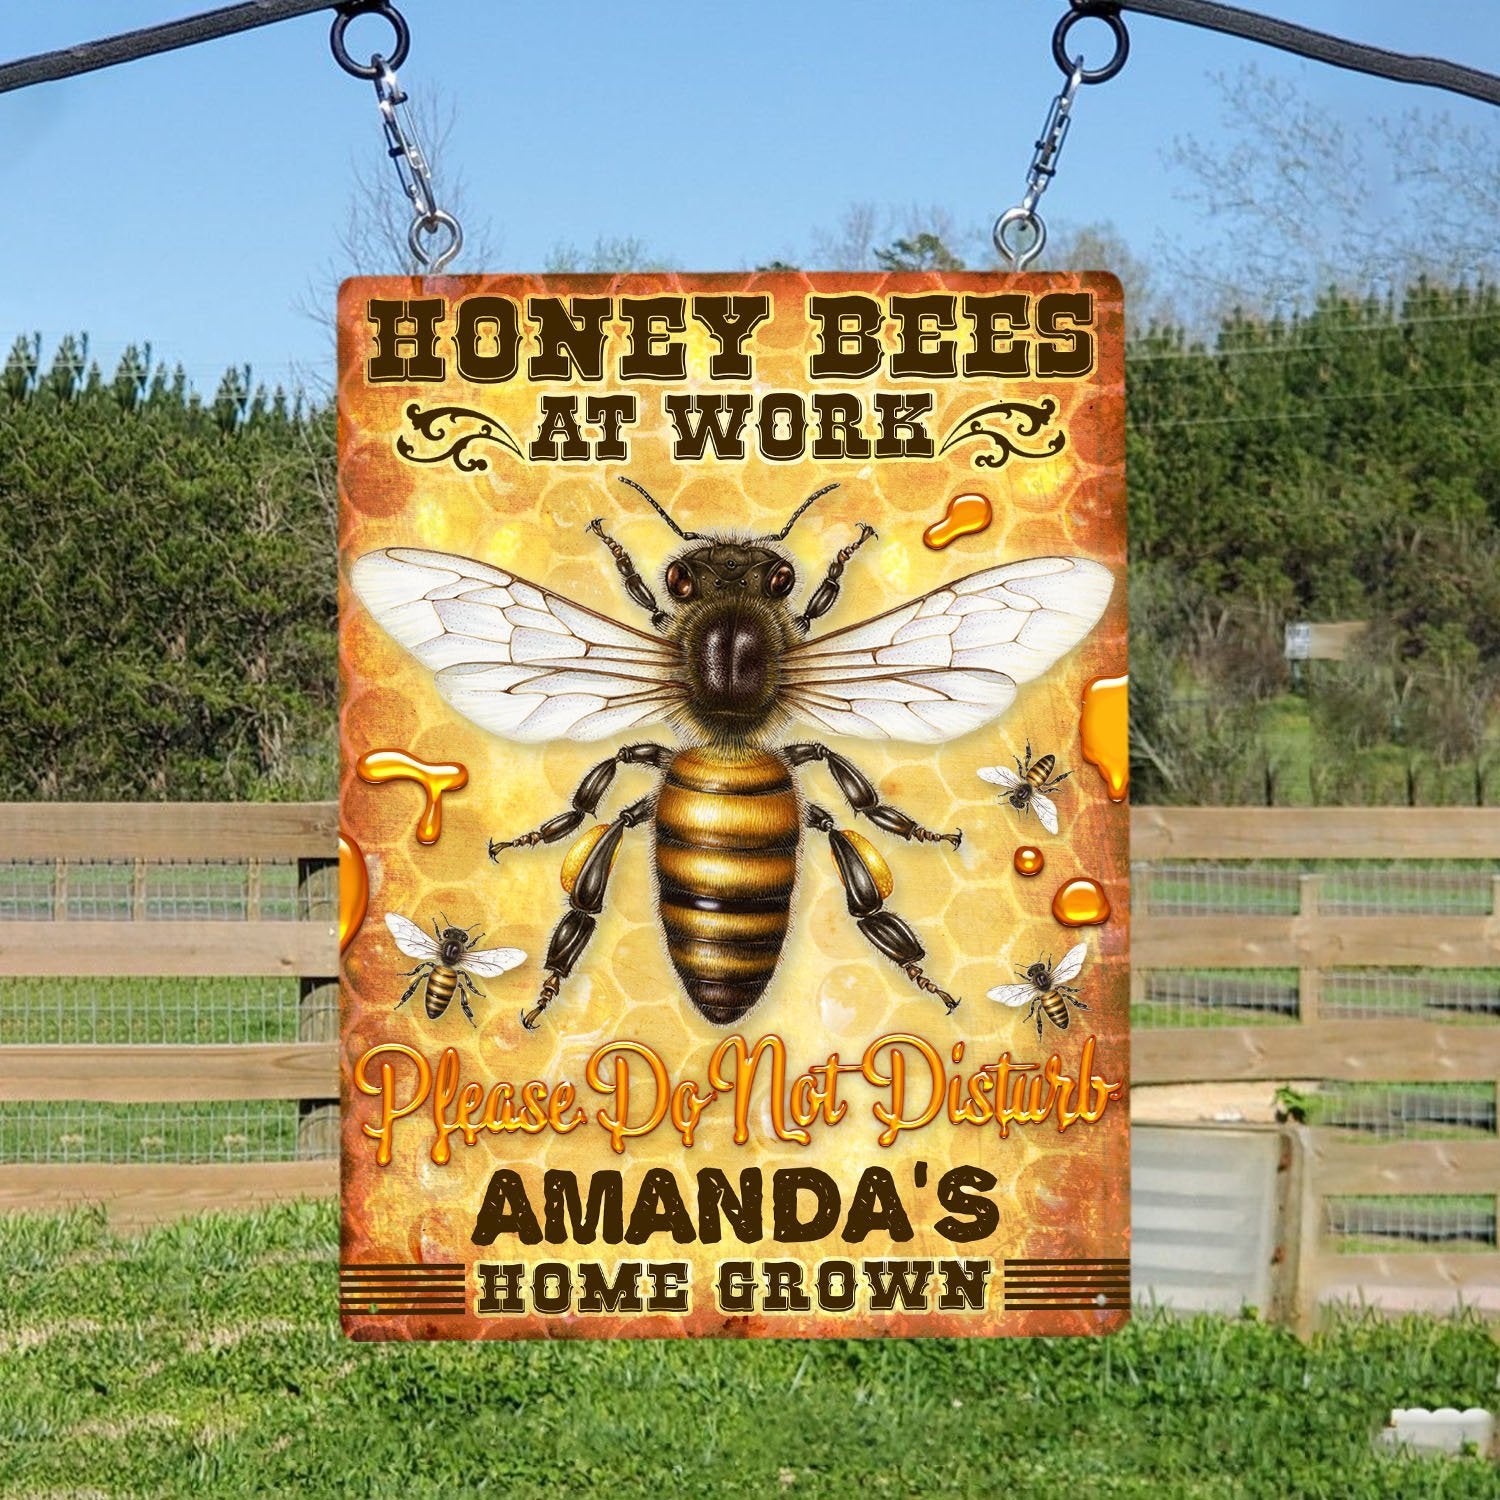 Customized Farm Sign, Bee Farm, Honey Bees At Work Please Do Not Disturb